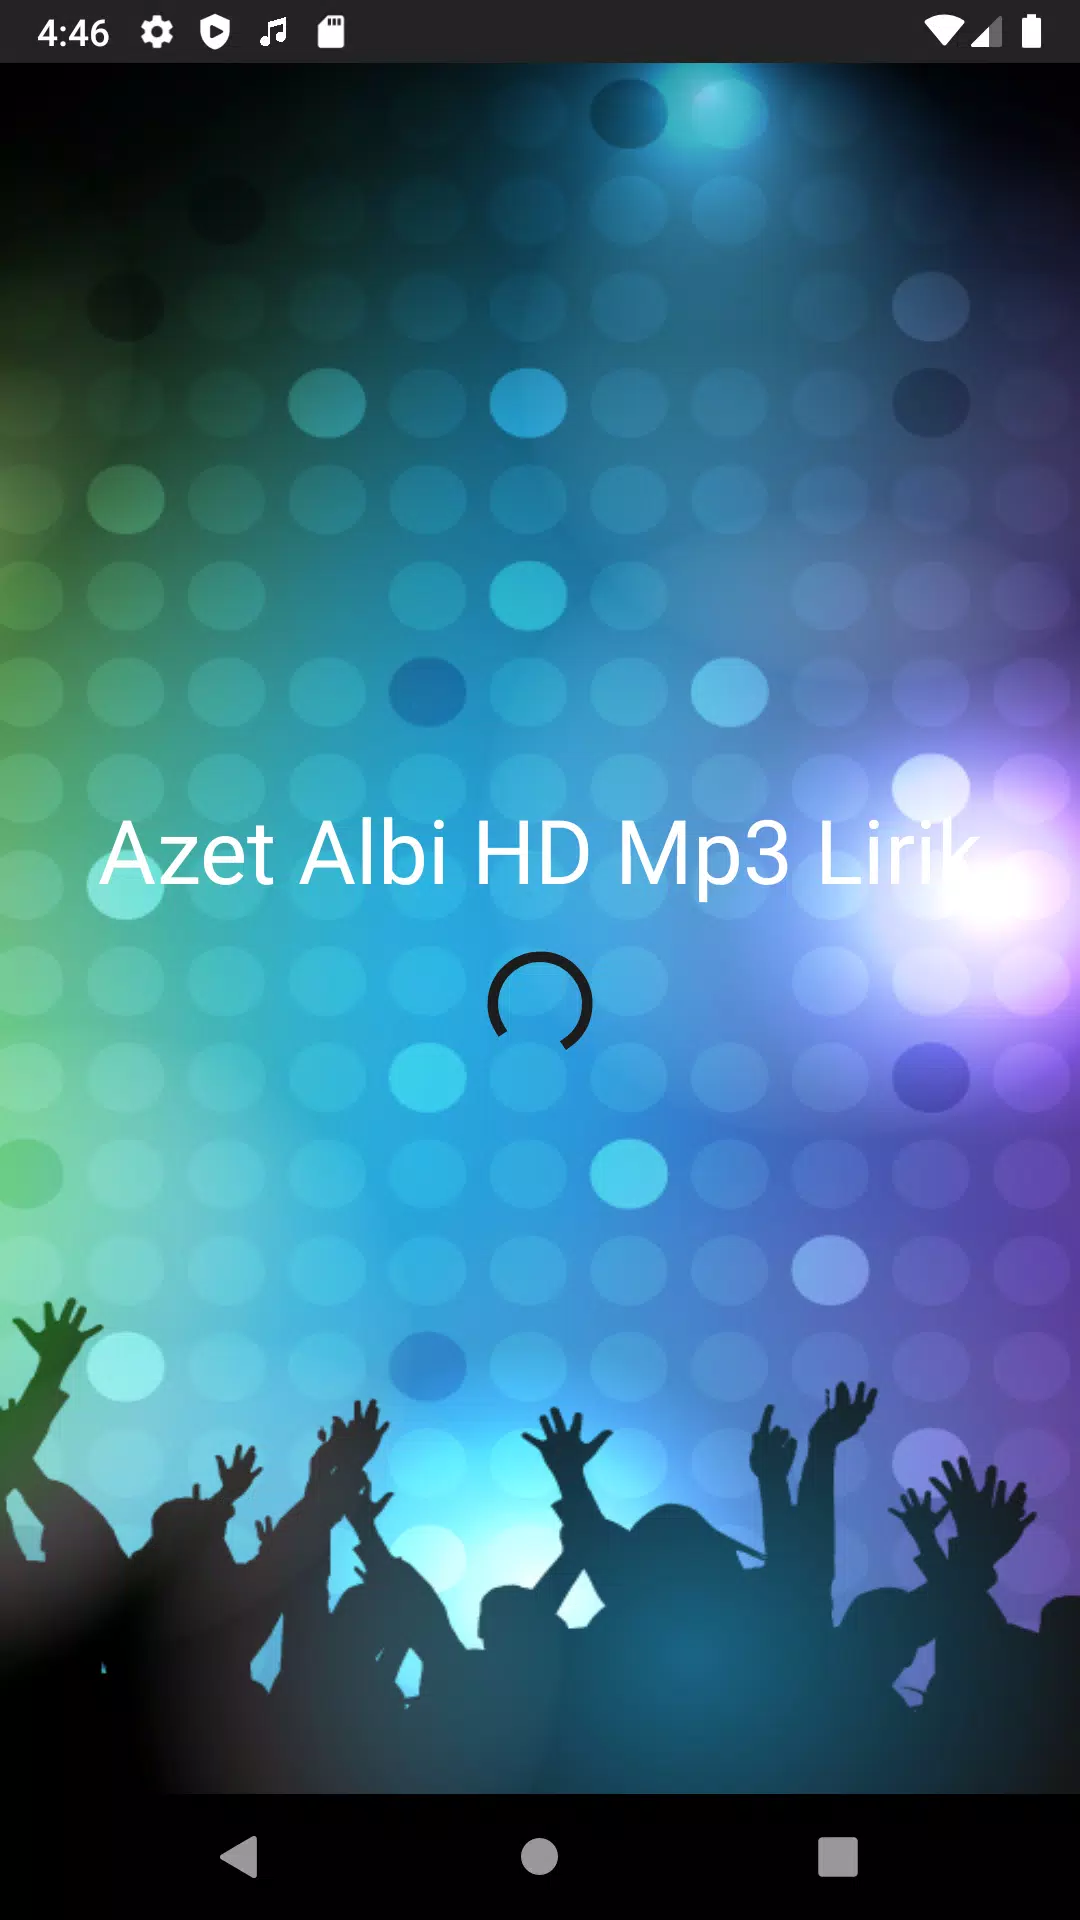 Azet & Albi Zuna : Offline APK for Android Download